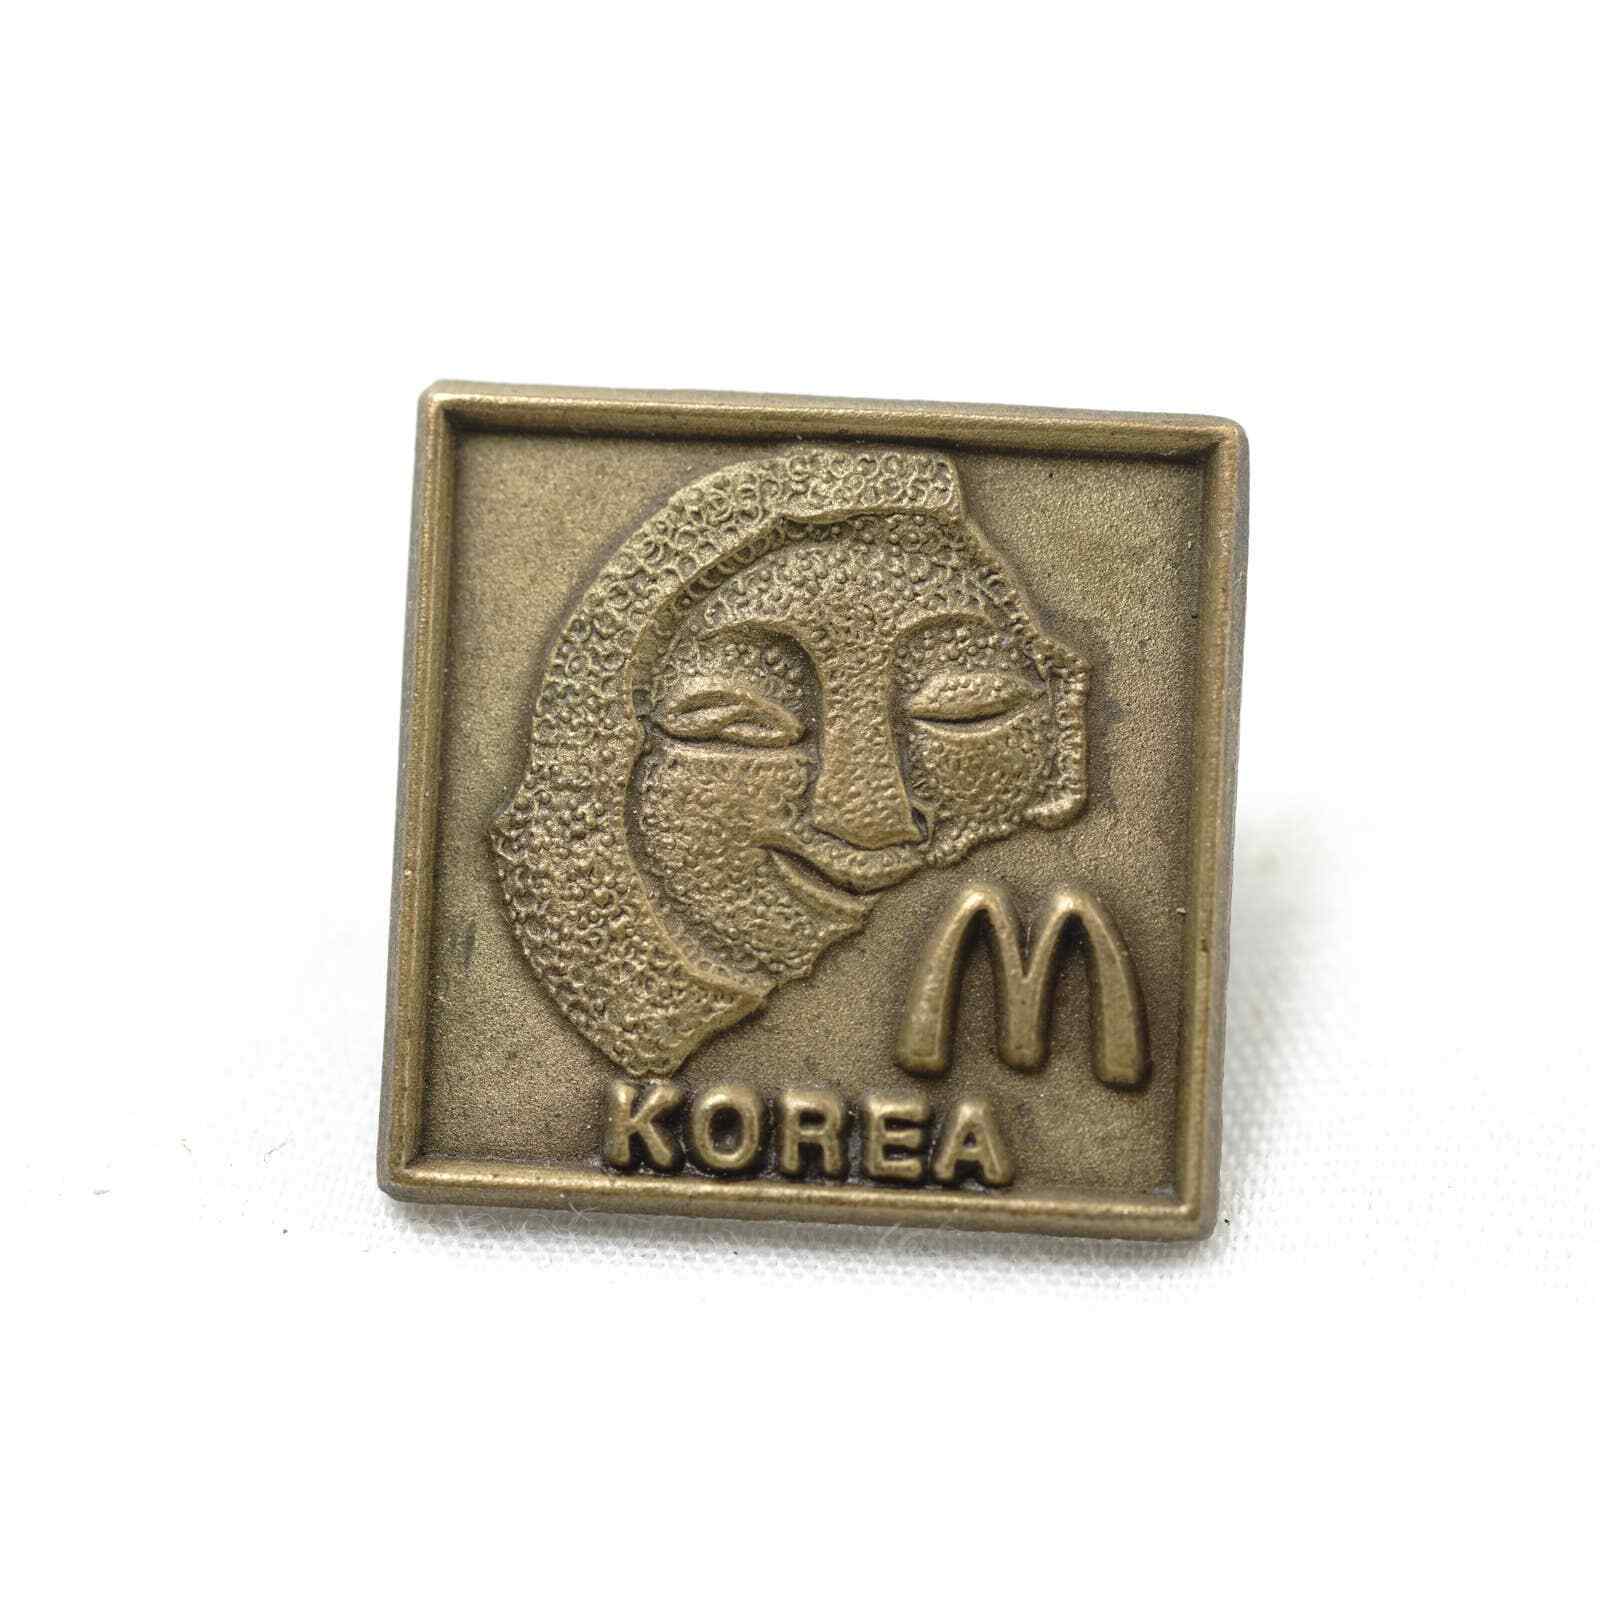 McDonalds Korea Lapel Pin Button, Rare McDonalds Tie Tac Pinback